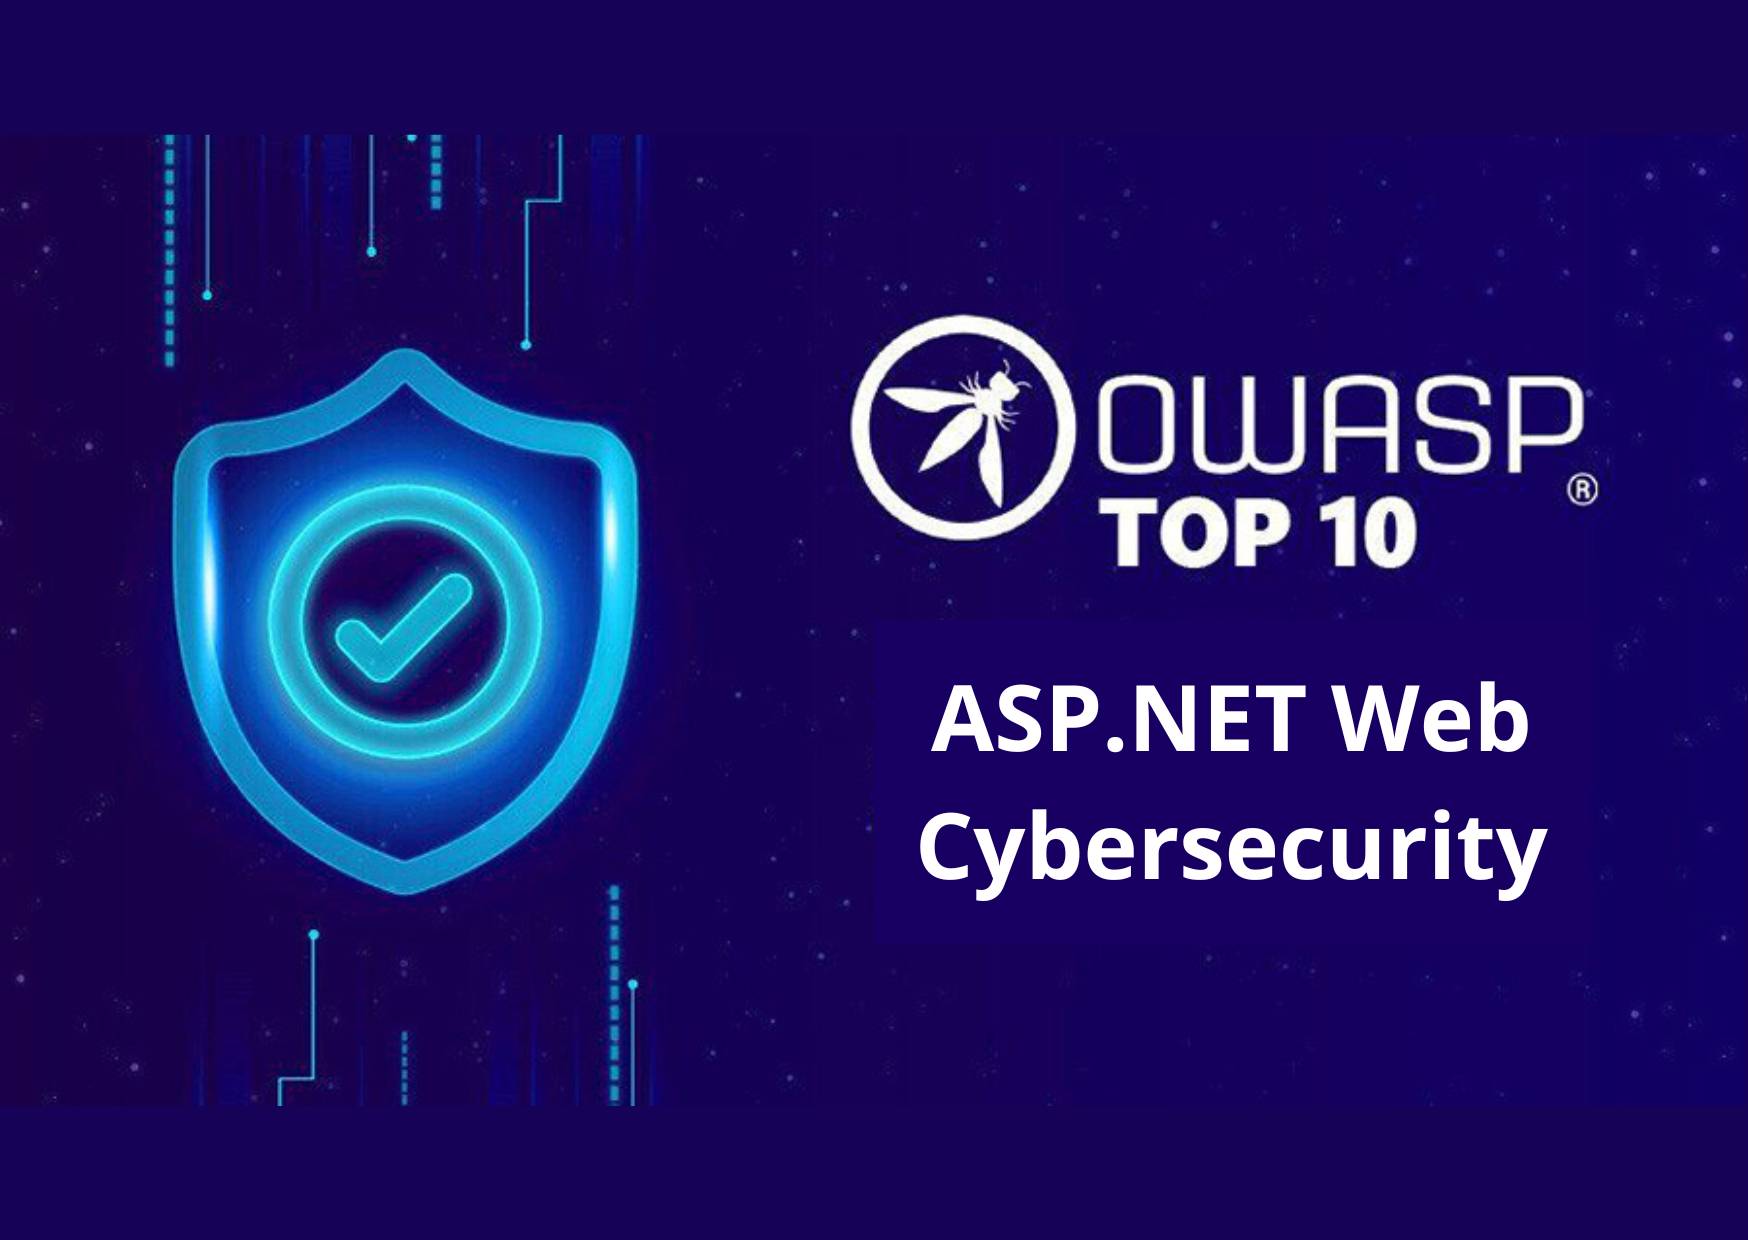 Asp.net web cybersecurity, OWASP TOP 10